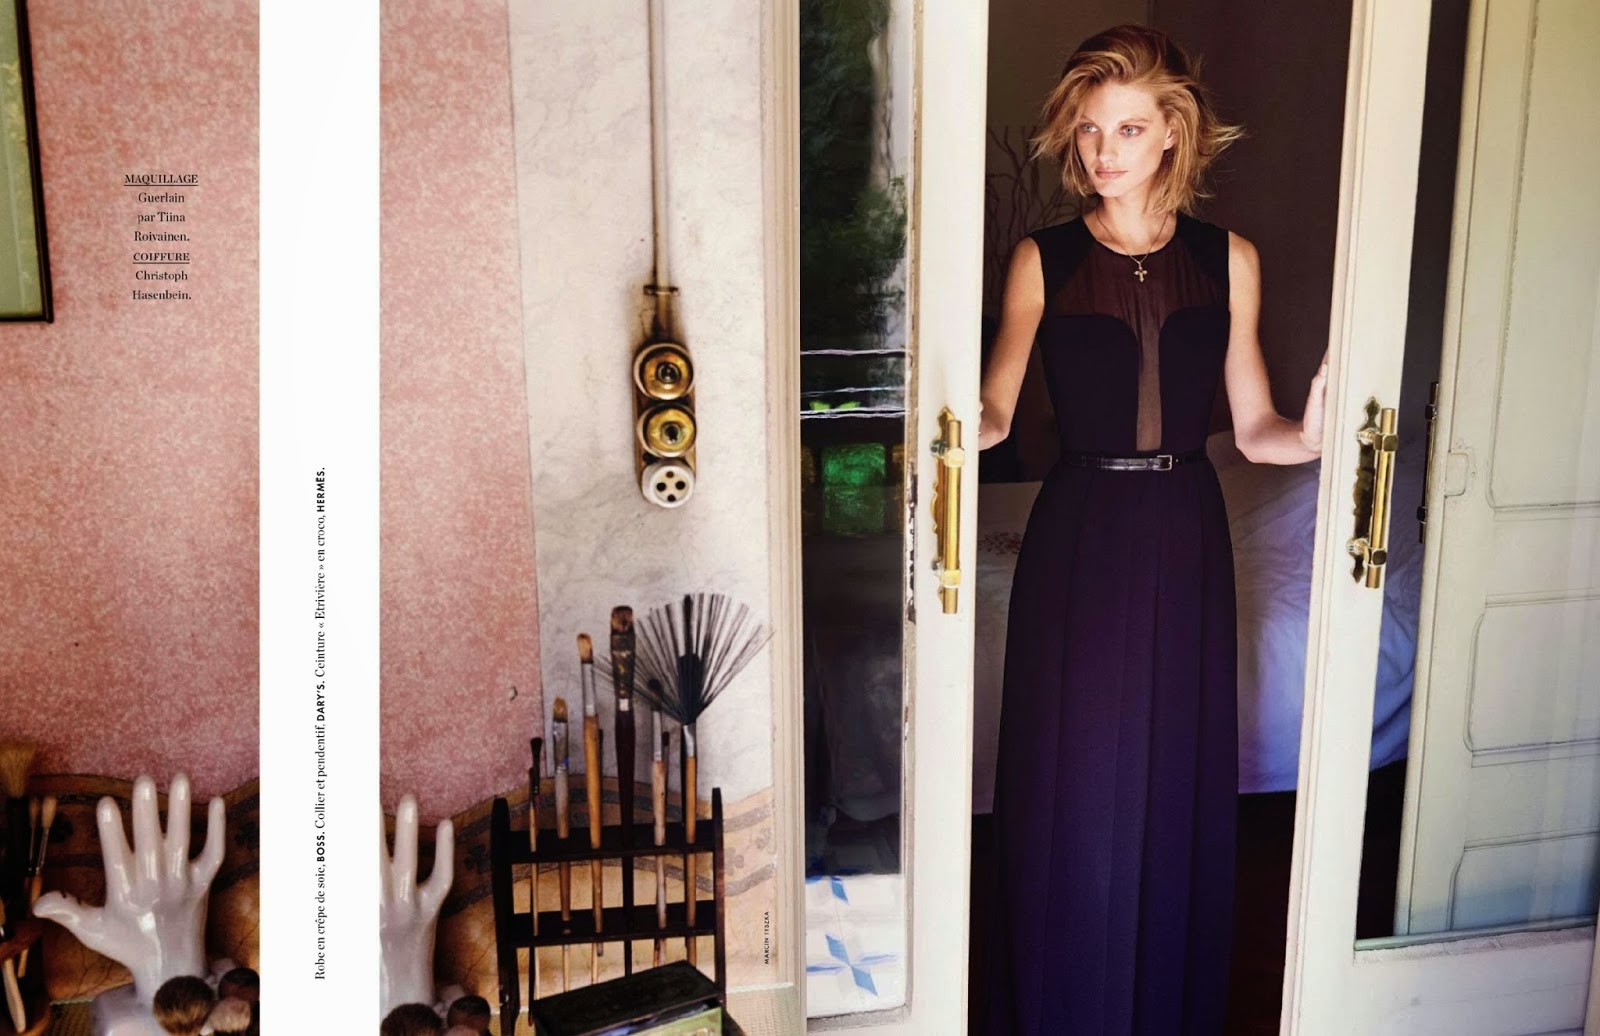 Patricia+van+der+Vliet+by+Marcin+Tyszka+for+Elle+Magazine,+France,+June+2014+18